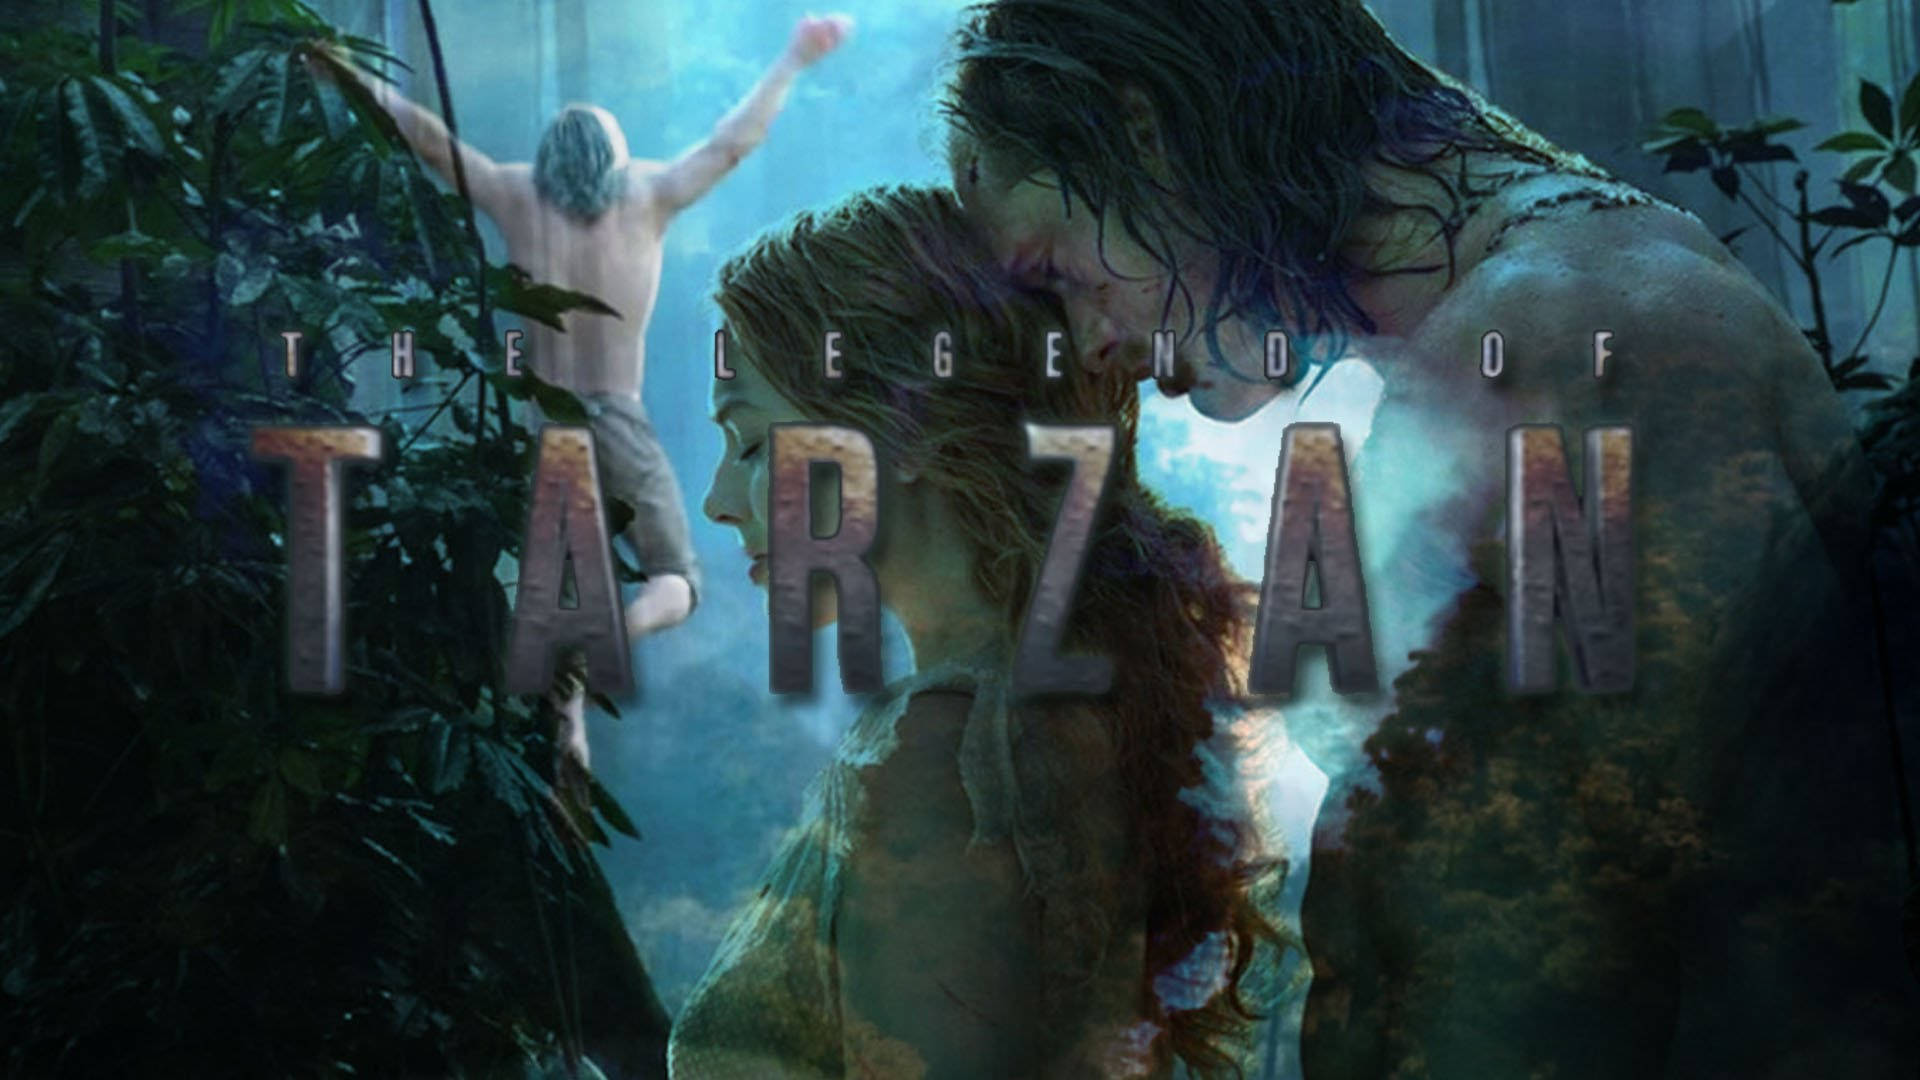 John Carter Taylor Kitsch As Tarzan Background